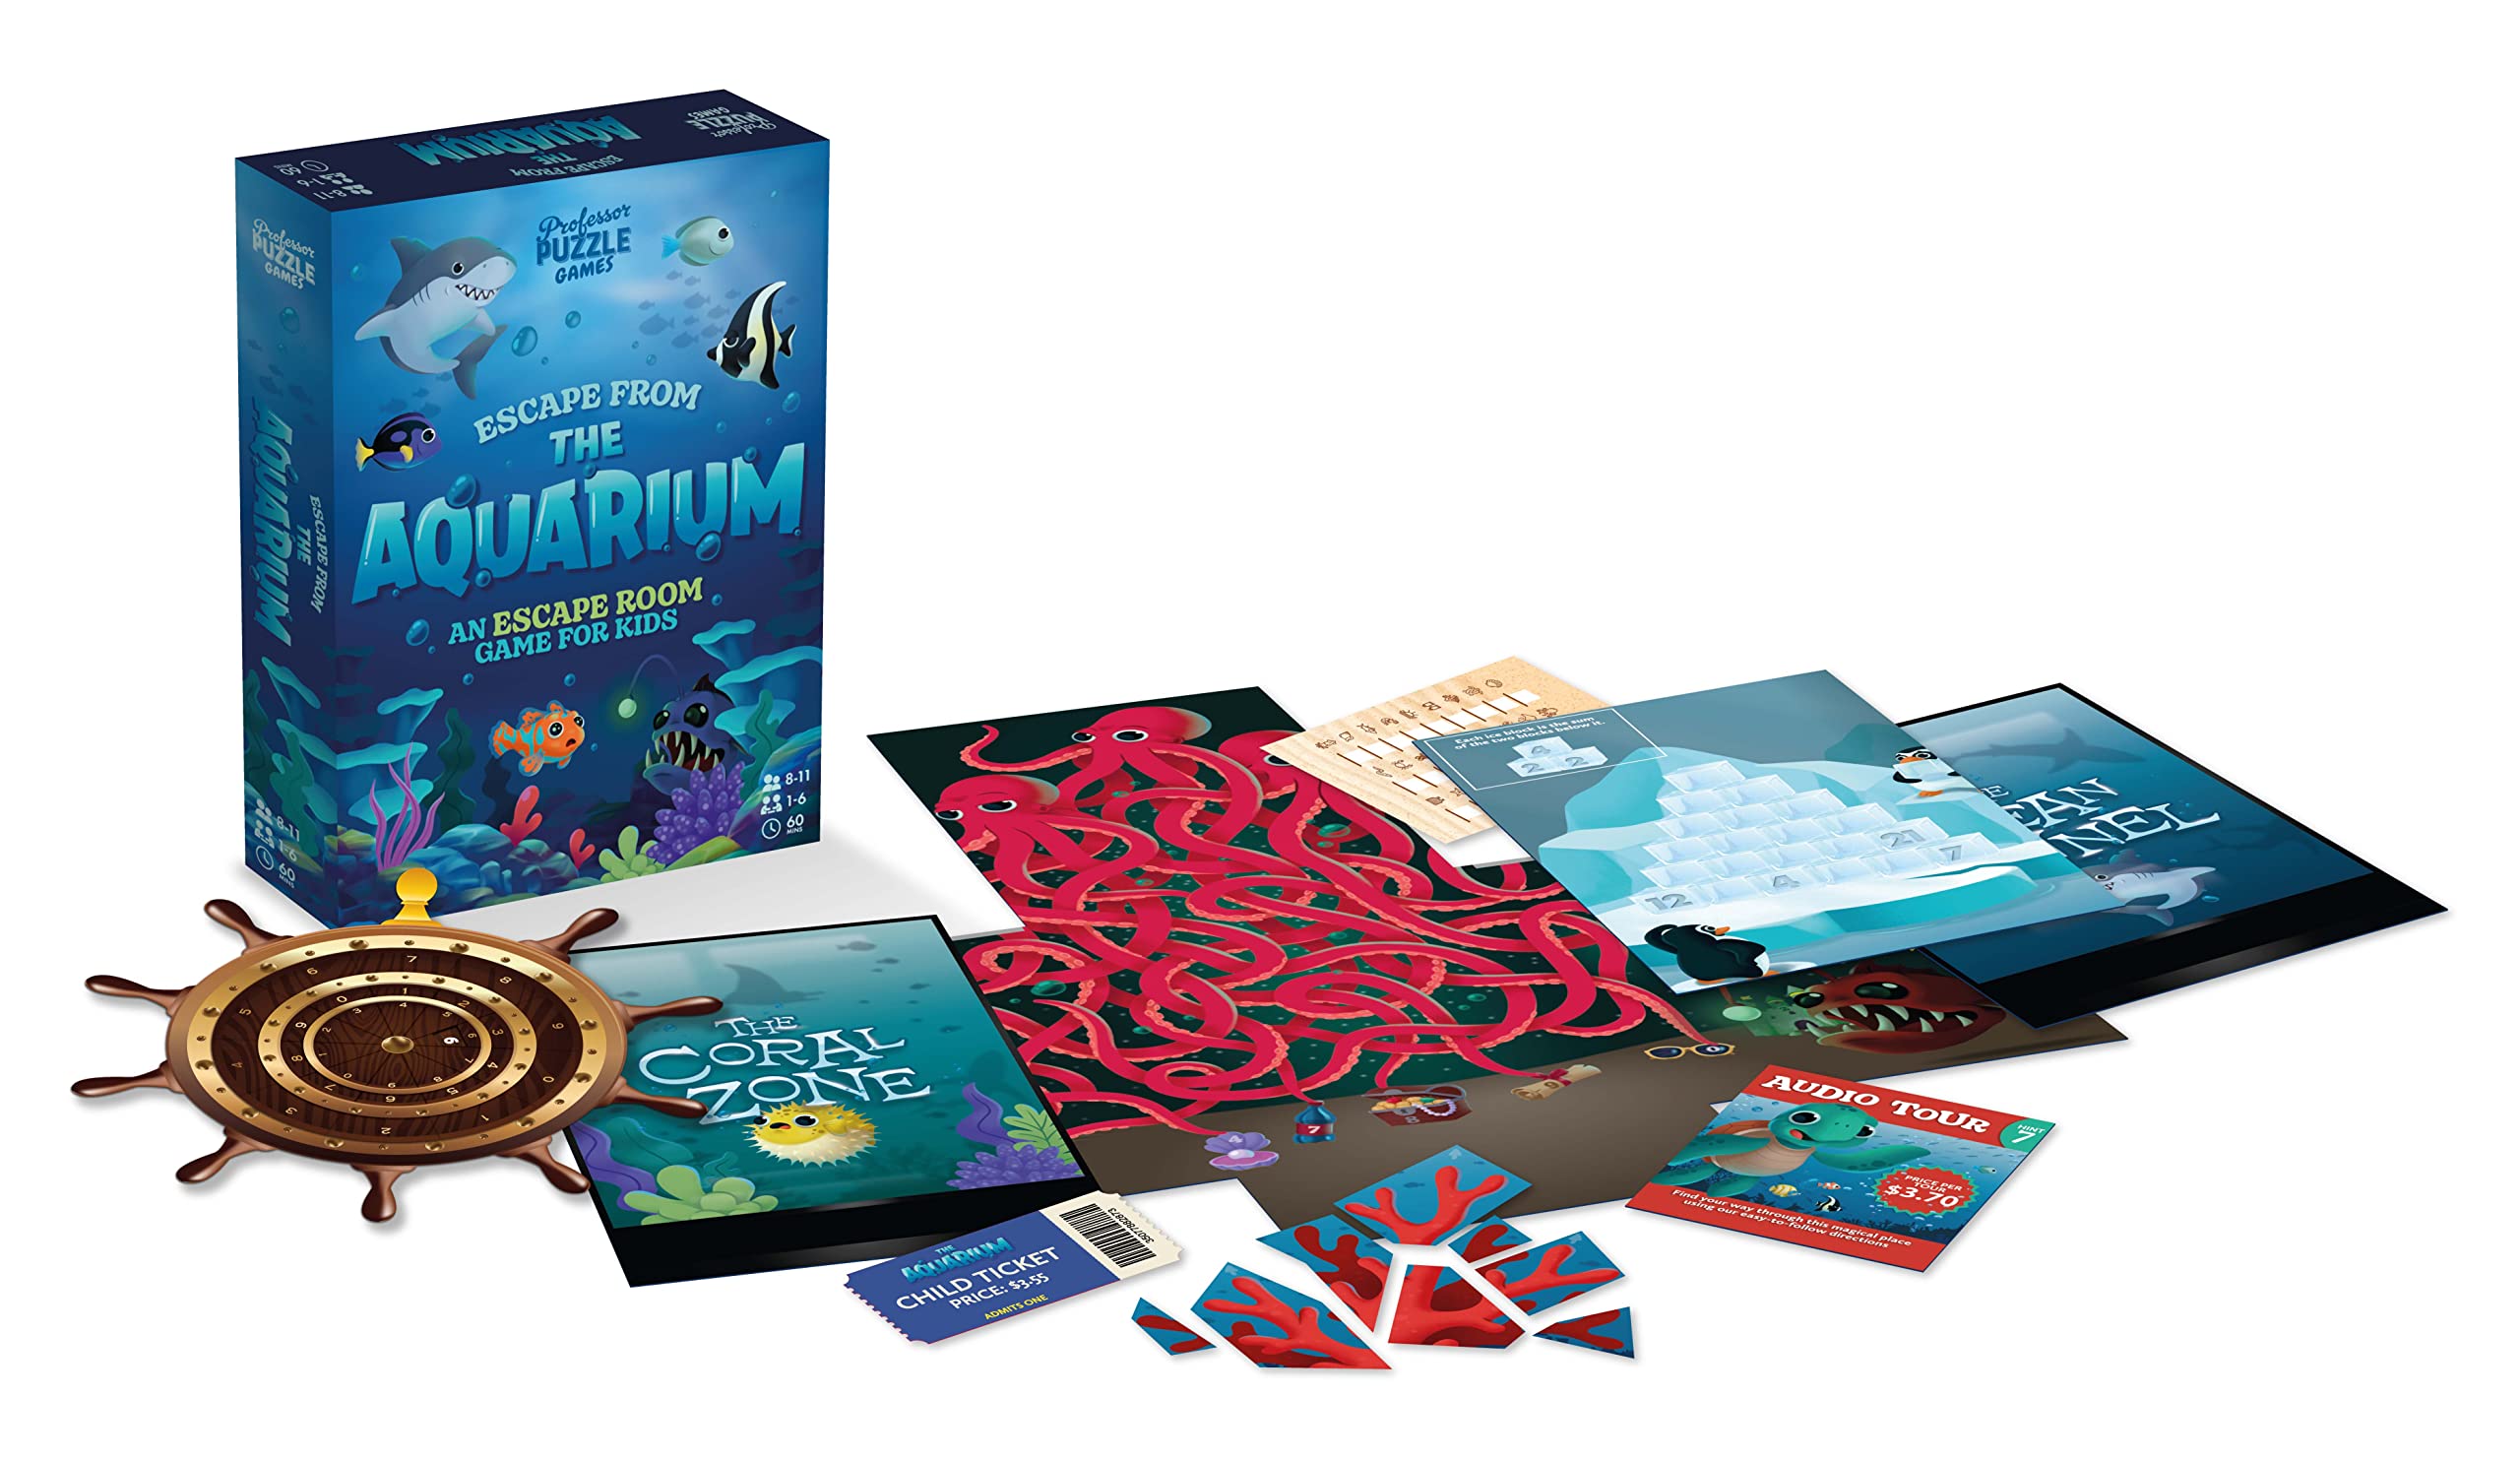 Escape From the Aquarium | An Escape Room Games for Kids